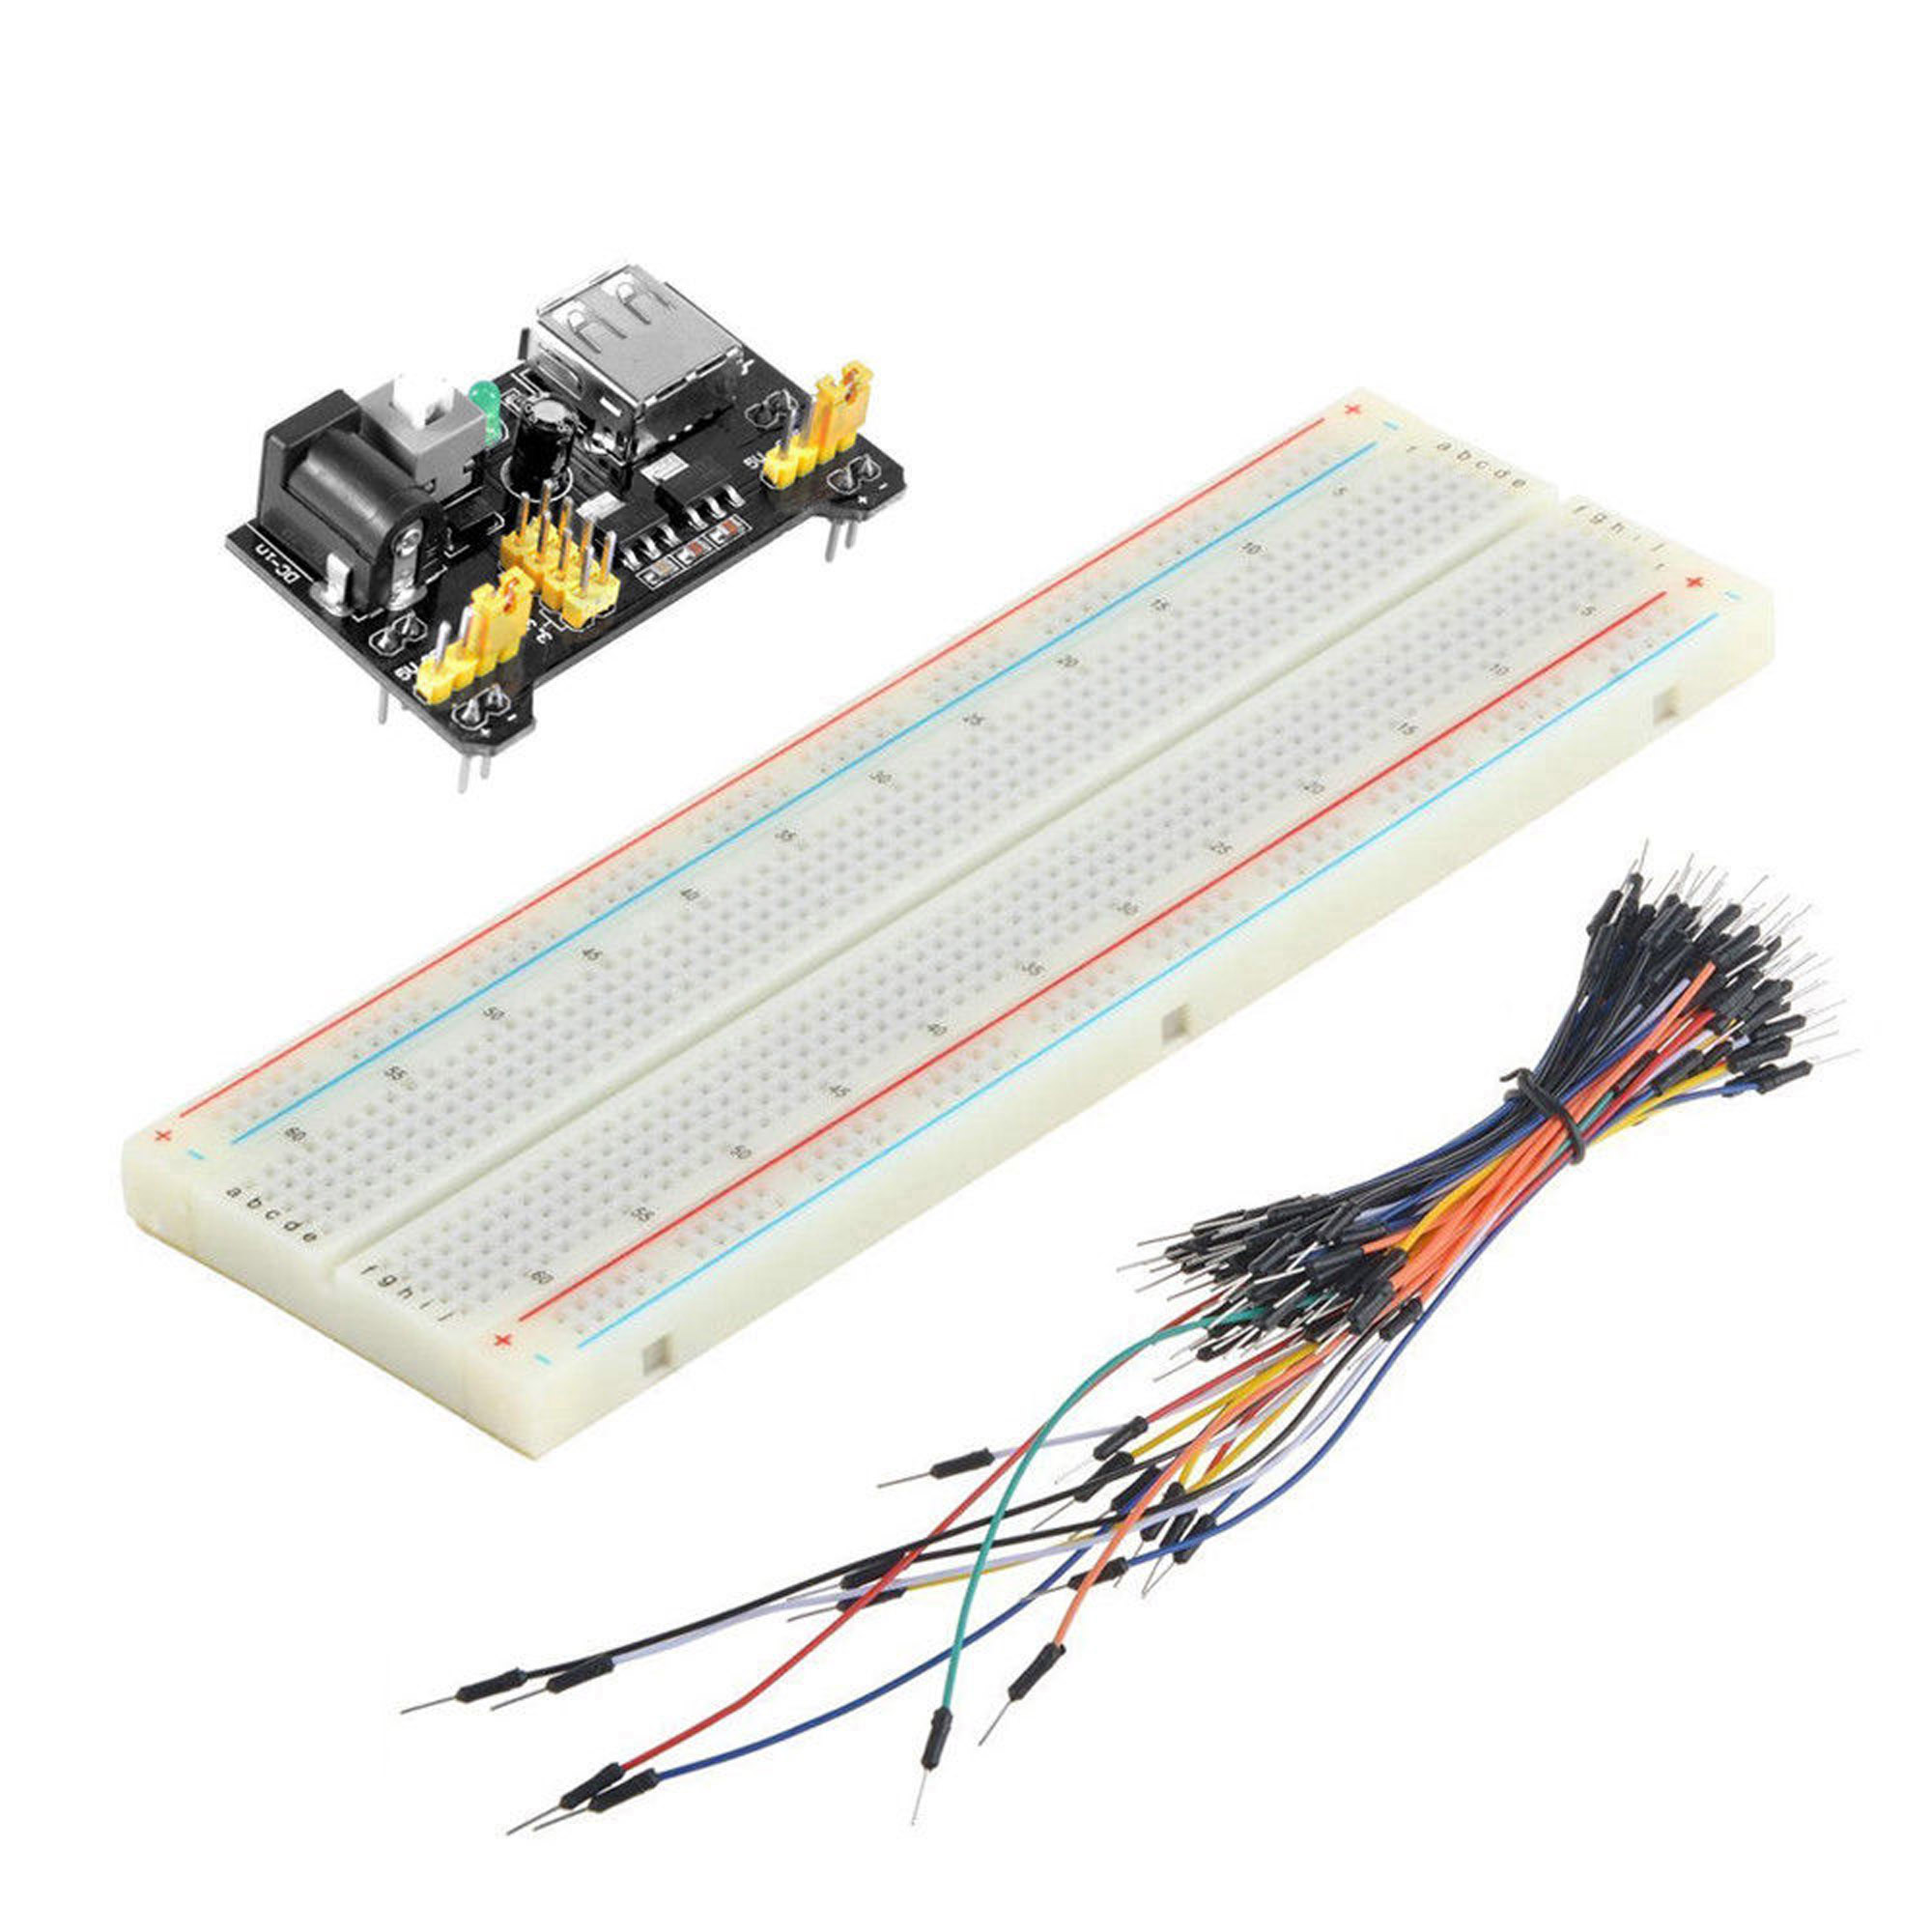 65x Solderless Jumper Wire Kit Breadboard Prototype DuPont Test Lead Arduino Pi